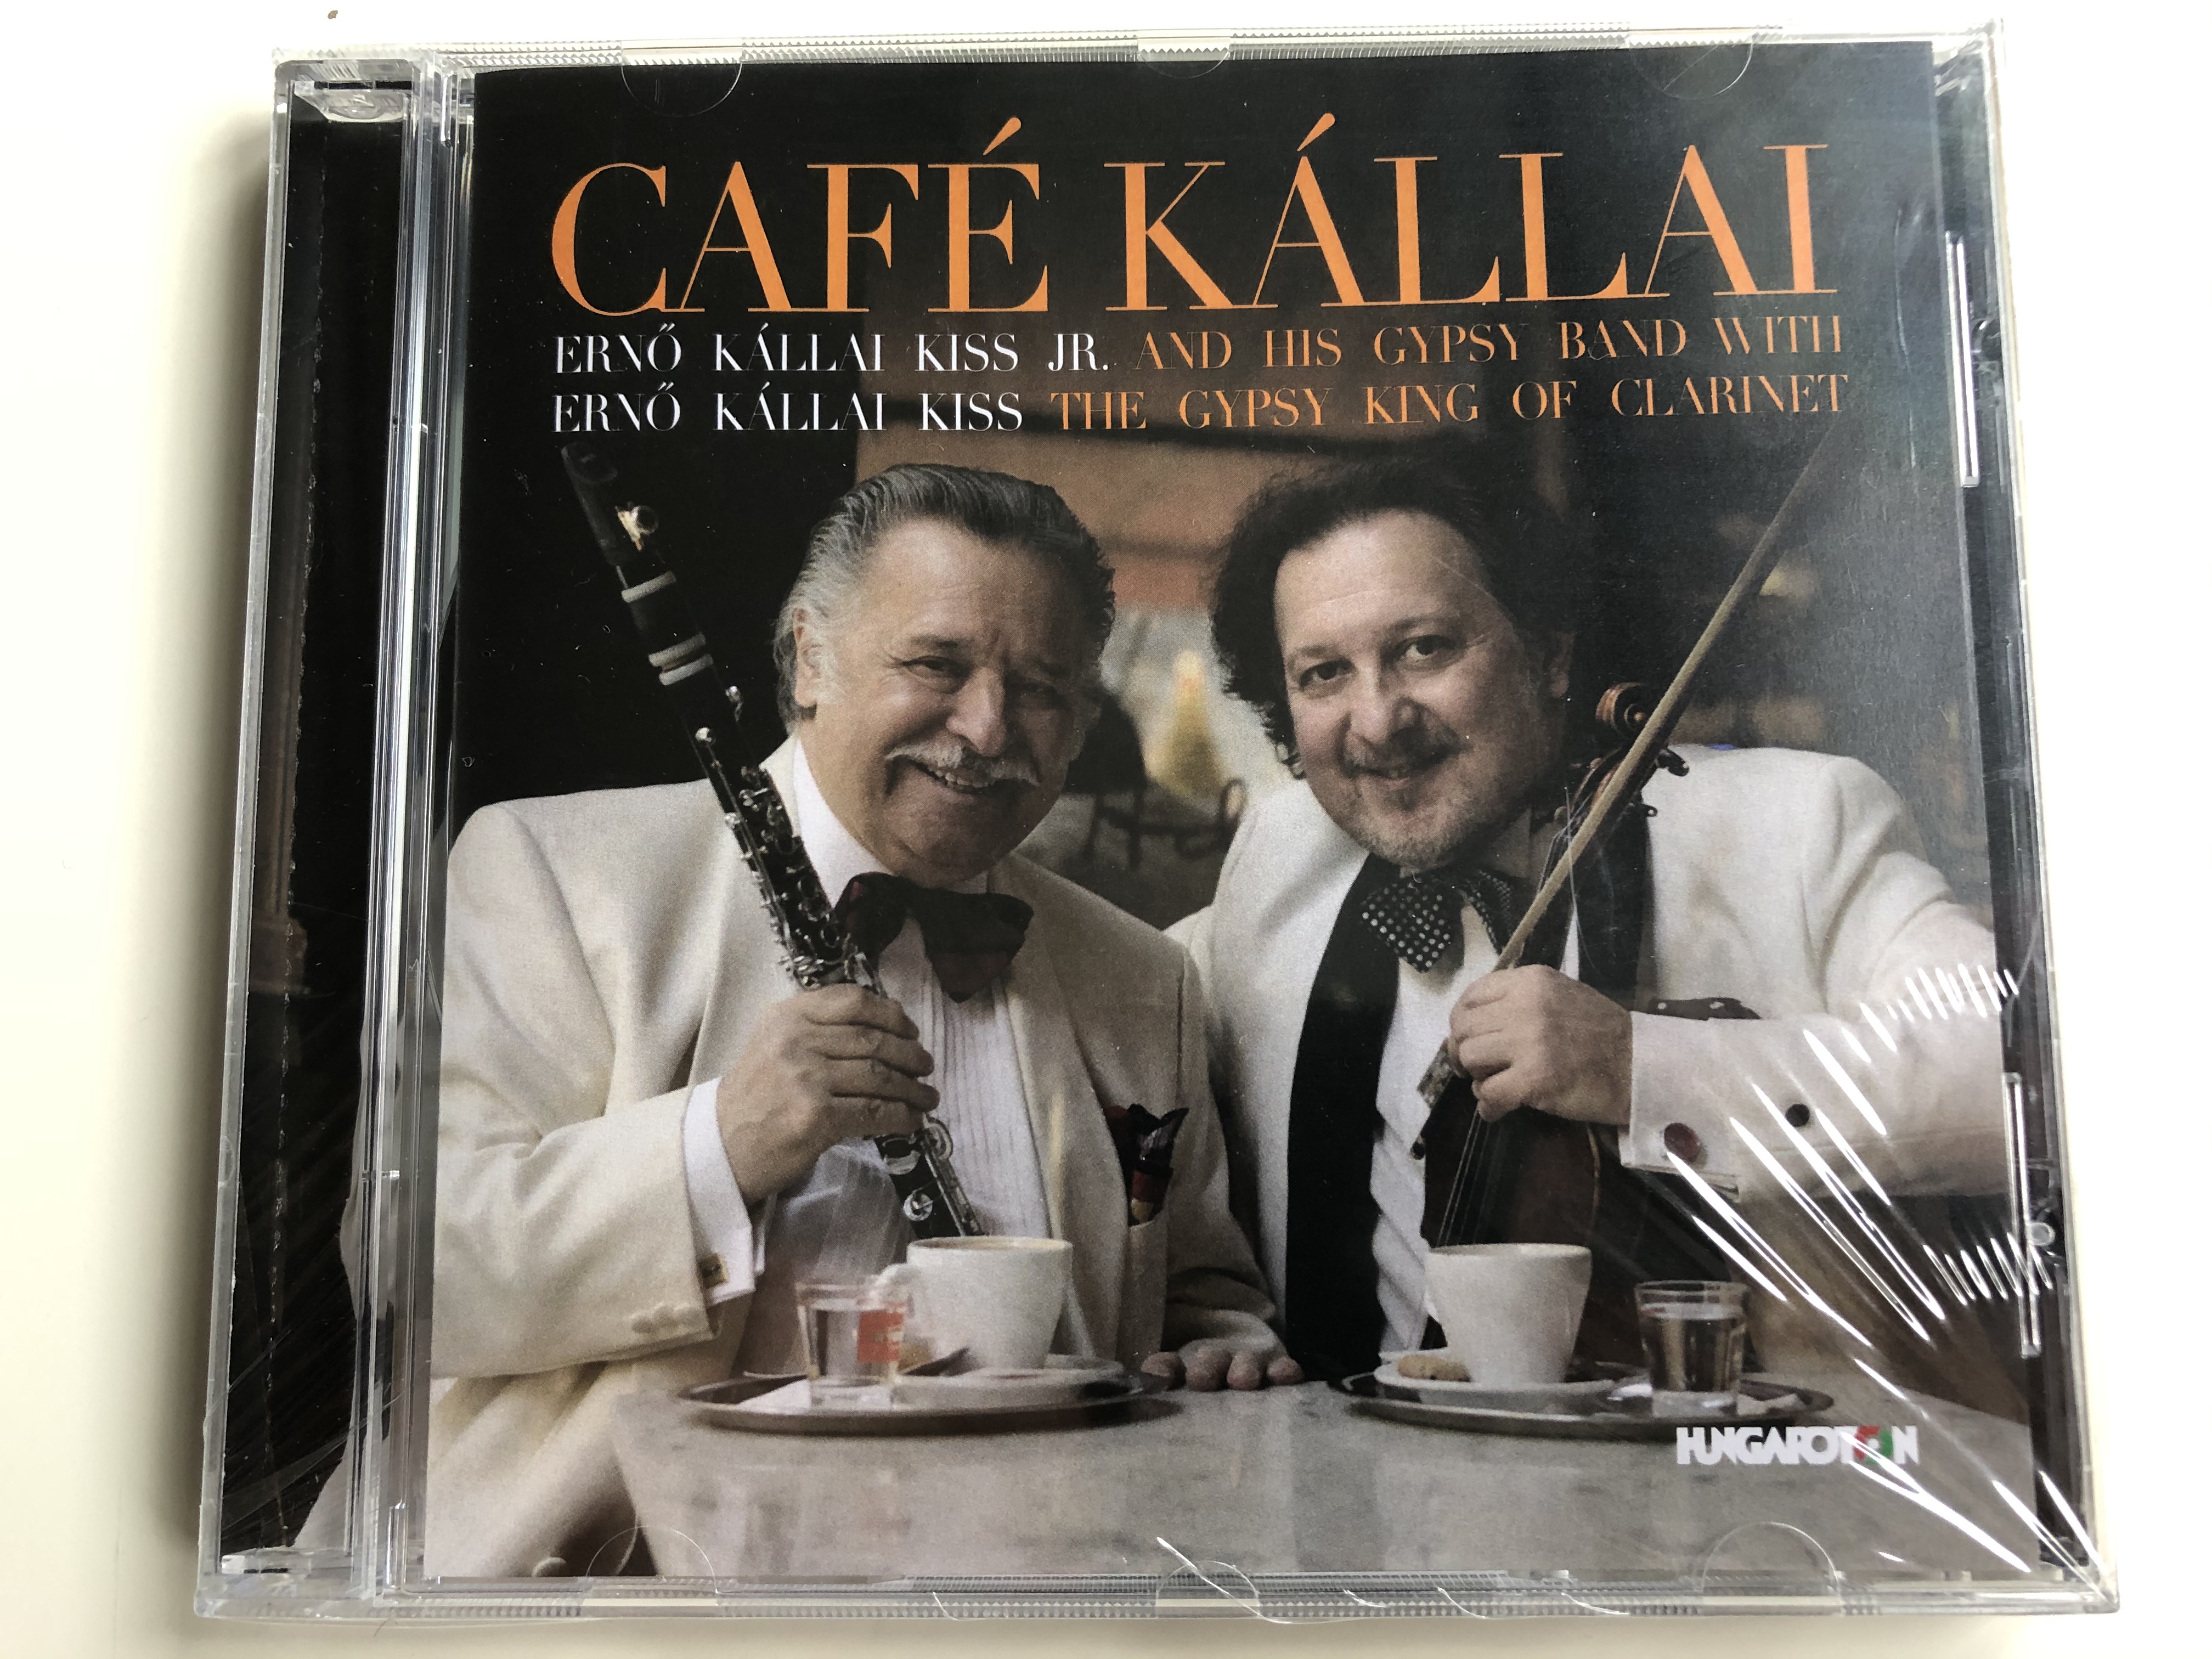 cafe-kallai-erno-kallai-kiss-jr.-and-his-gypsy-band-with-erno-kallai-kiss-the-gypsy-king-of-clarinet-hungaroton-audio-cd-2015-hcd-10342-1-.jpg